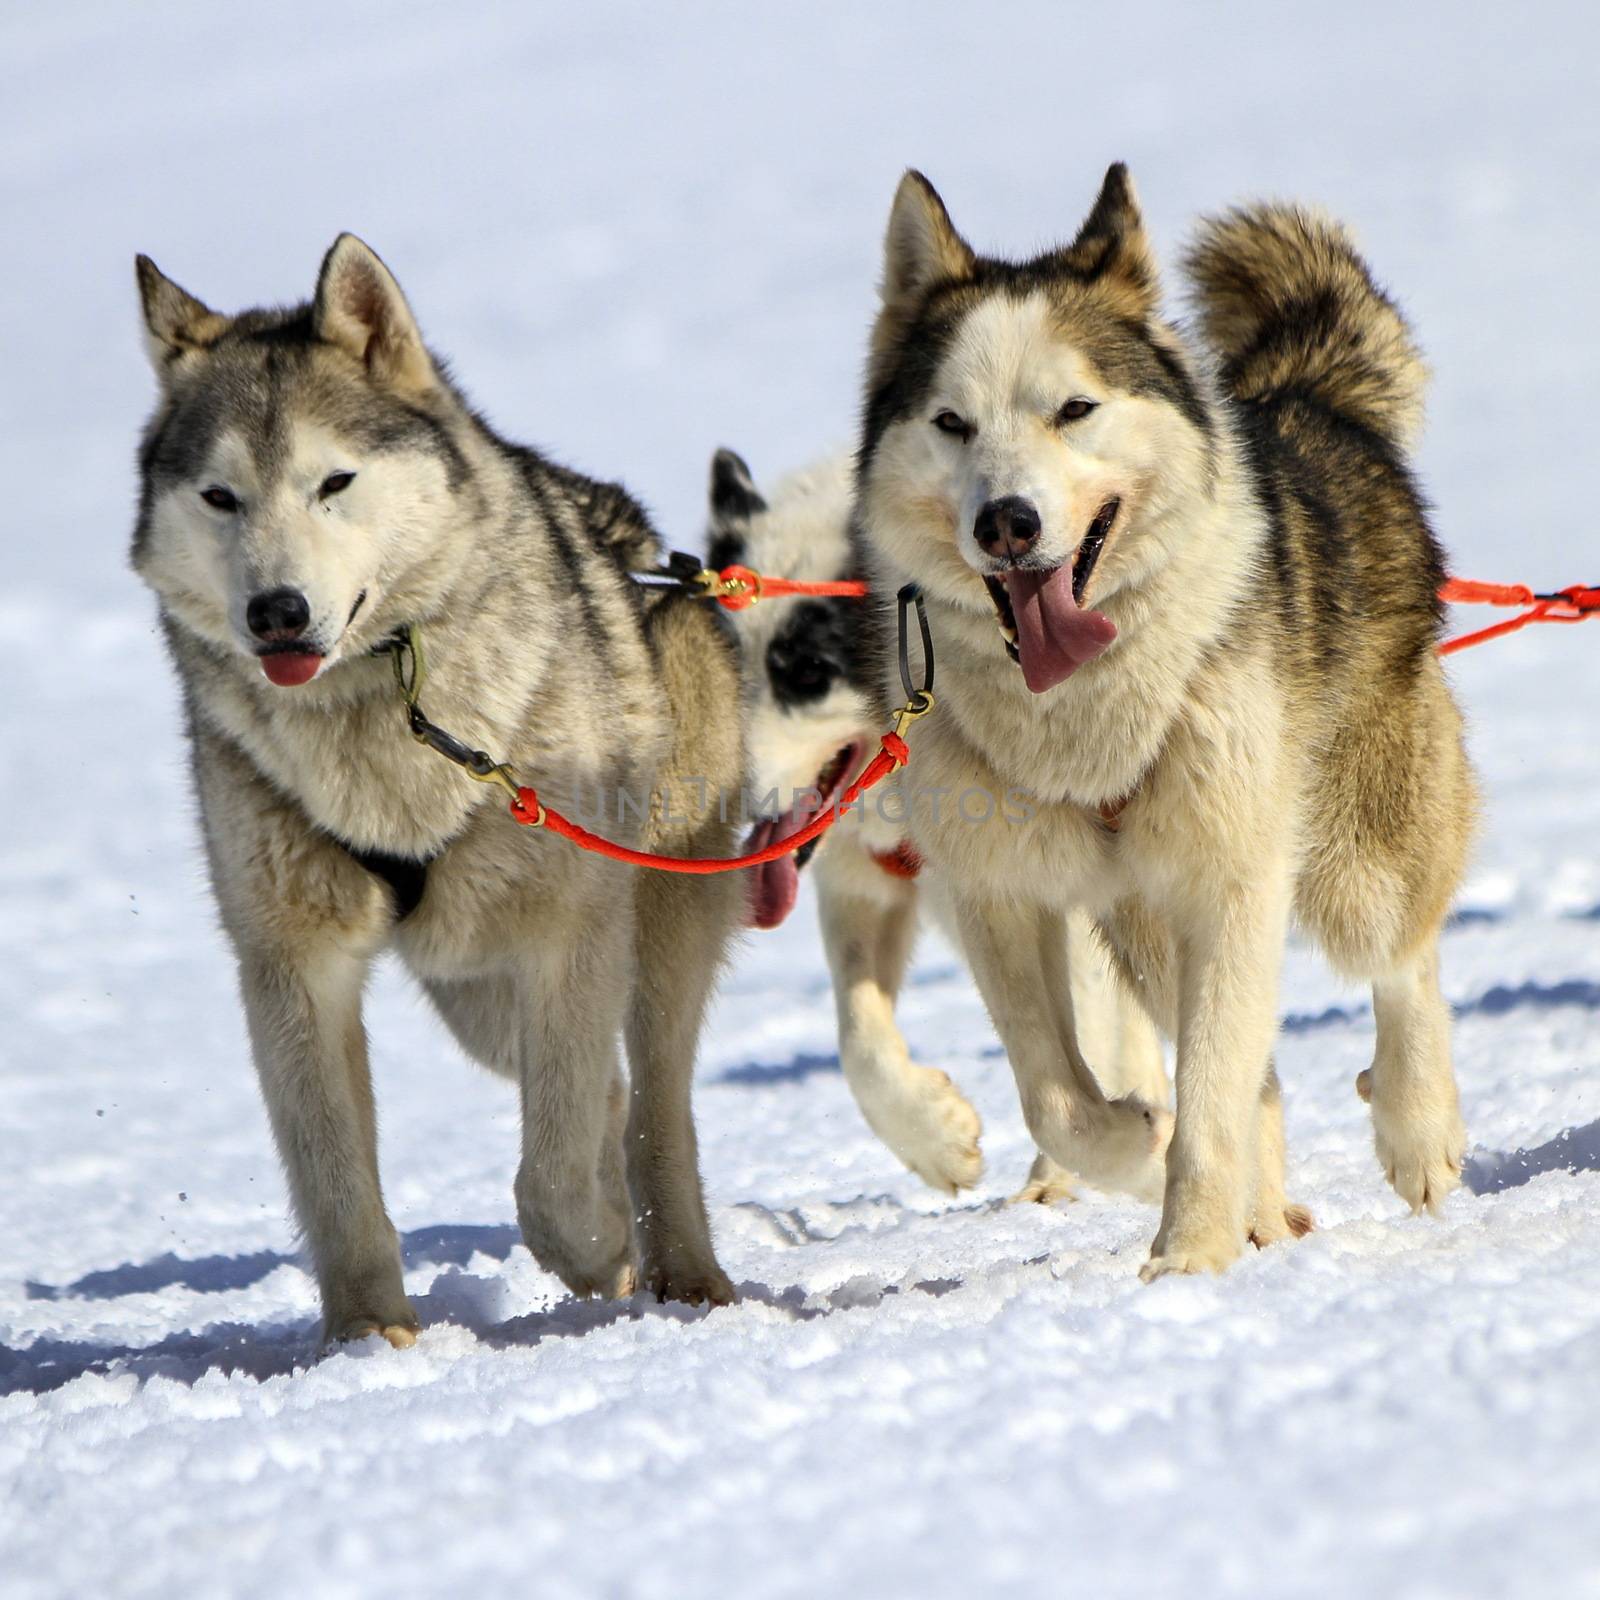 Husky sled dog team at work by Elenaphotos21